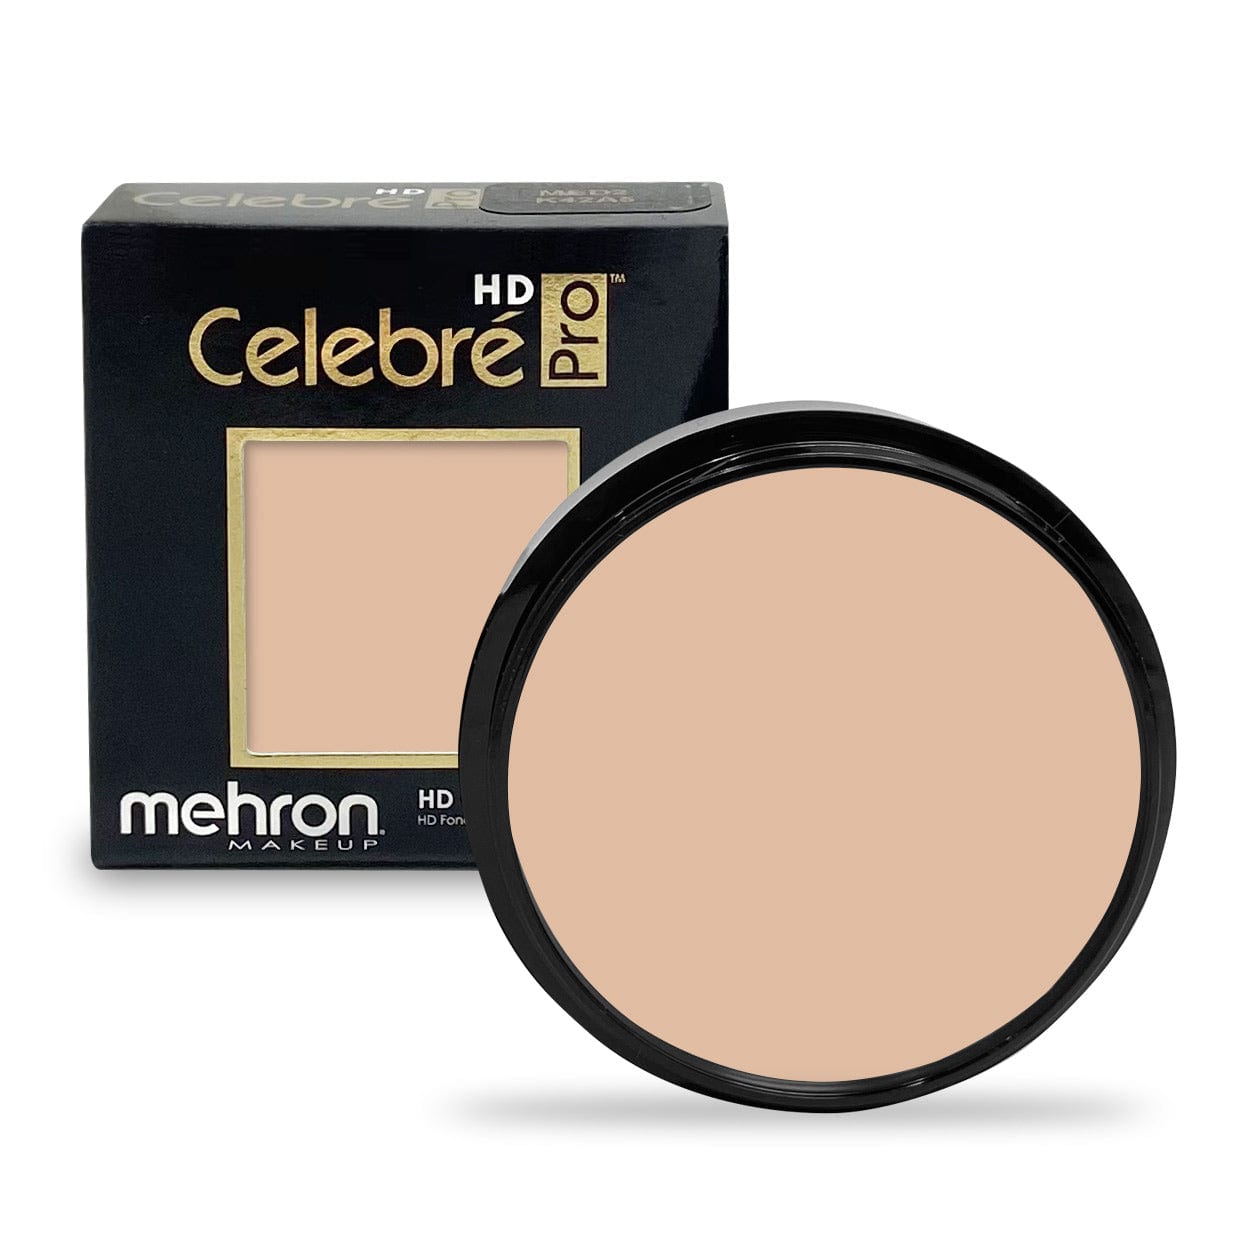 Mehron Celebre Pro HD-Cream 25g - Light 3 - Mehron